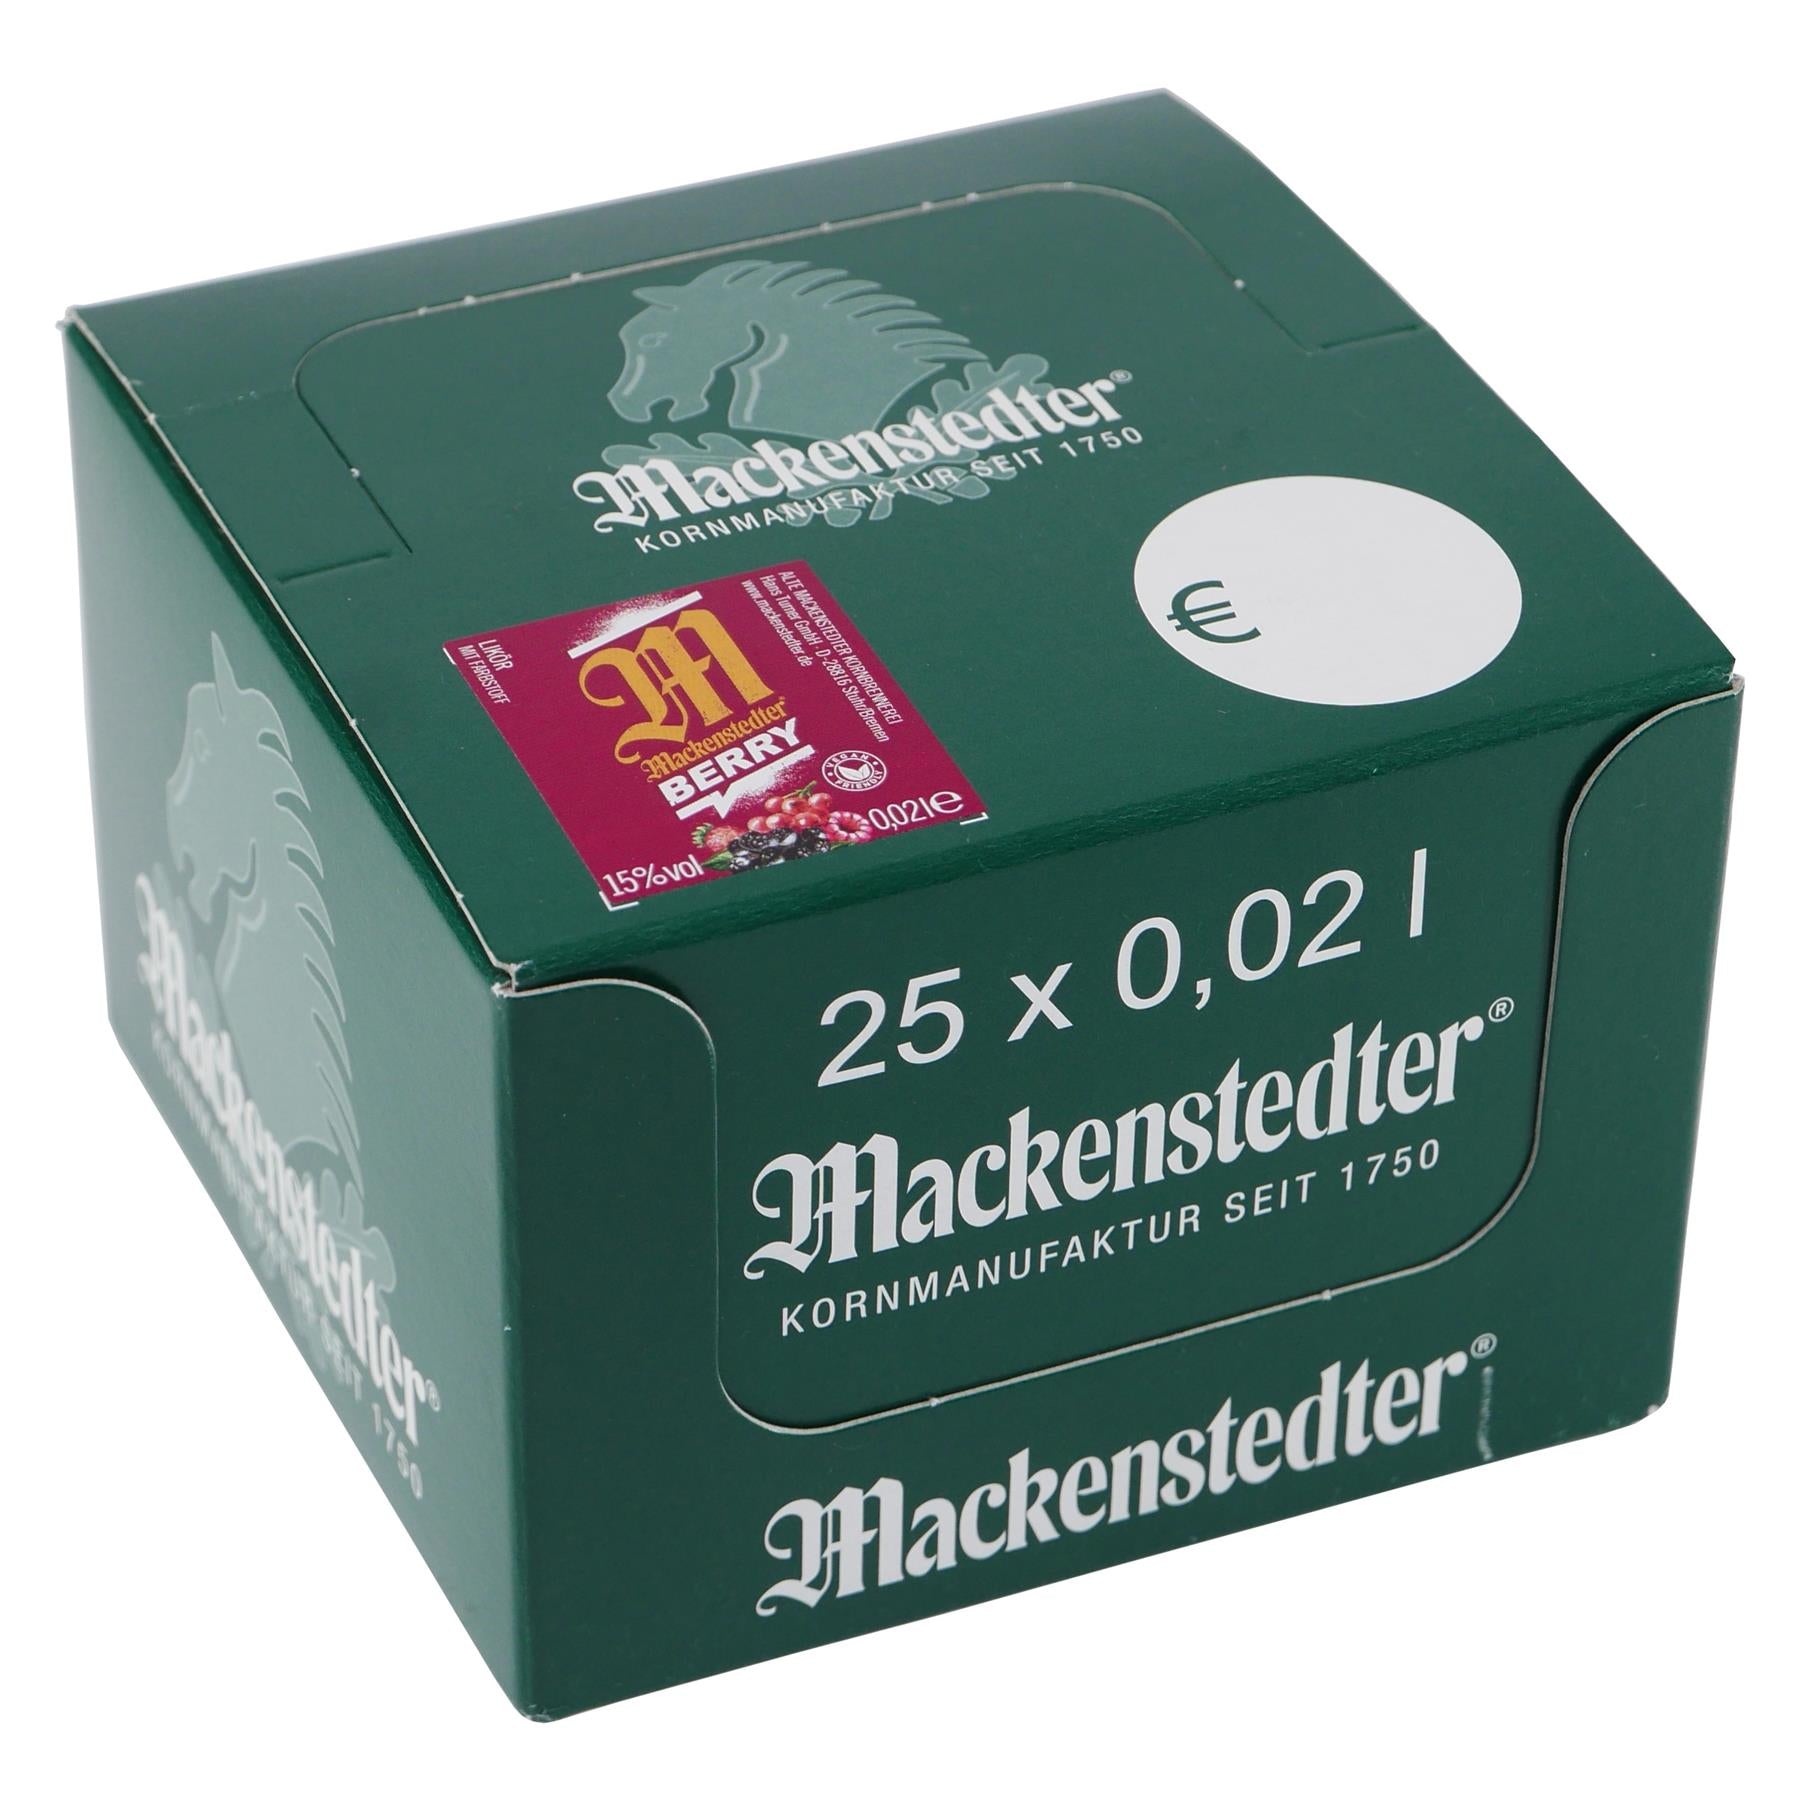 Mackenstedter Berry Likör (25 x 0,02L)